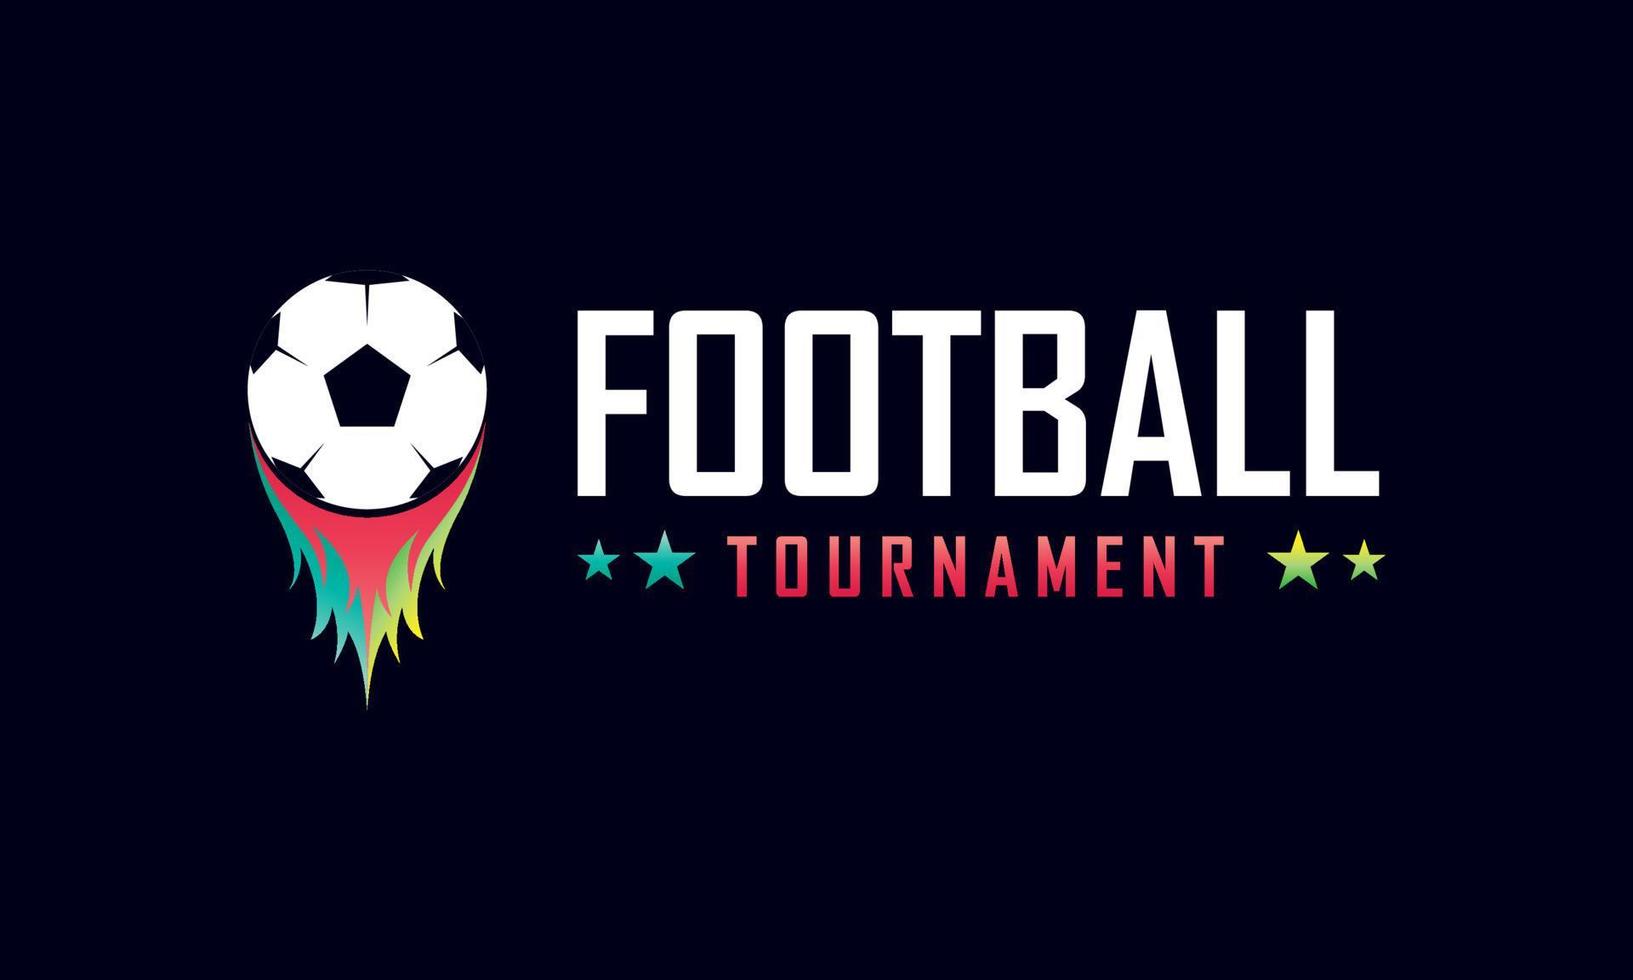 Football soccer logo template. Vector emblem design colorful style on dark background.